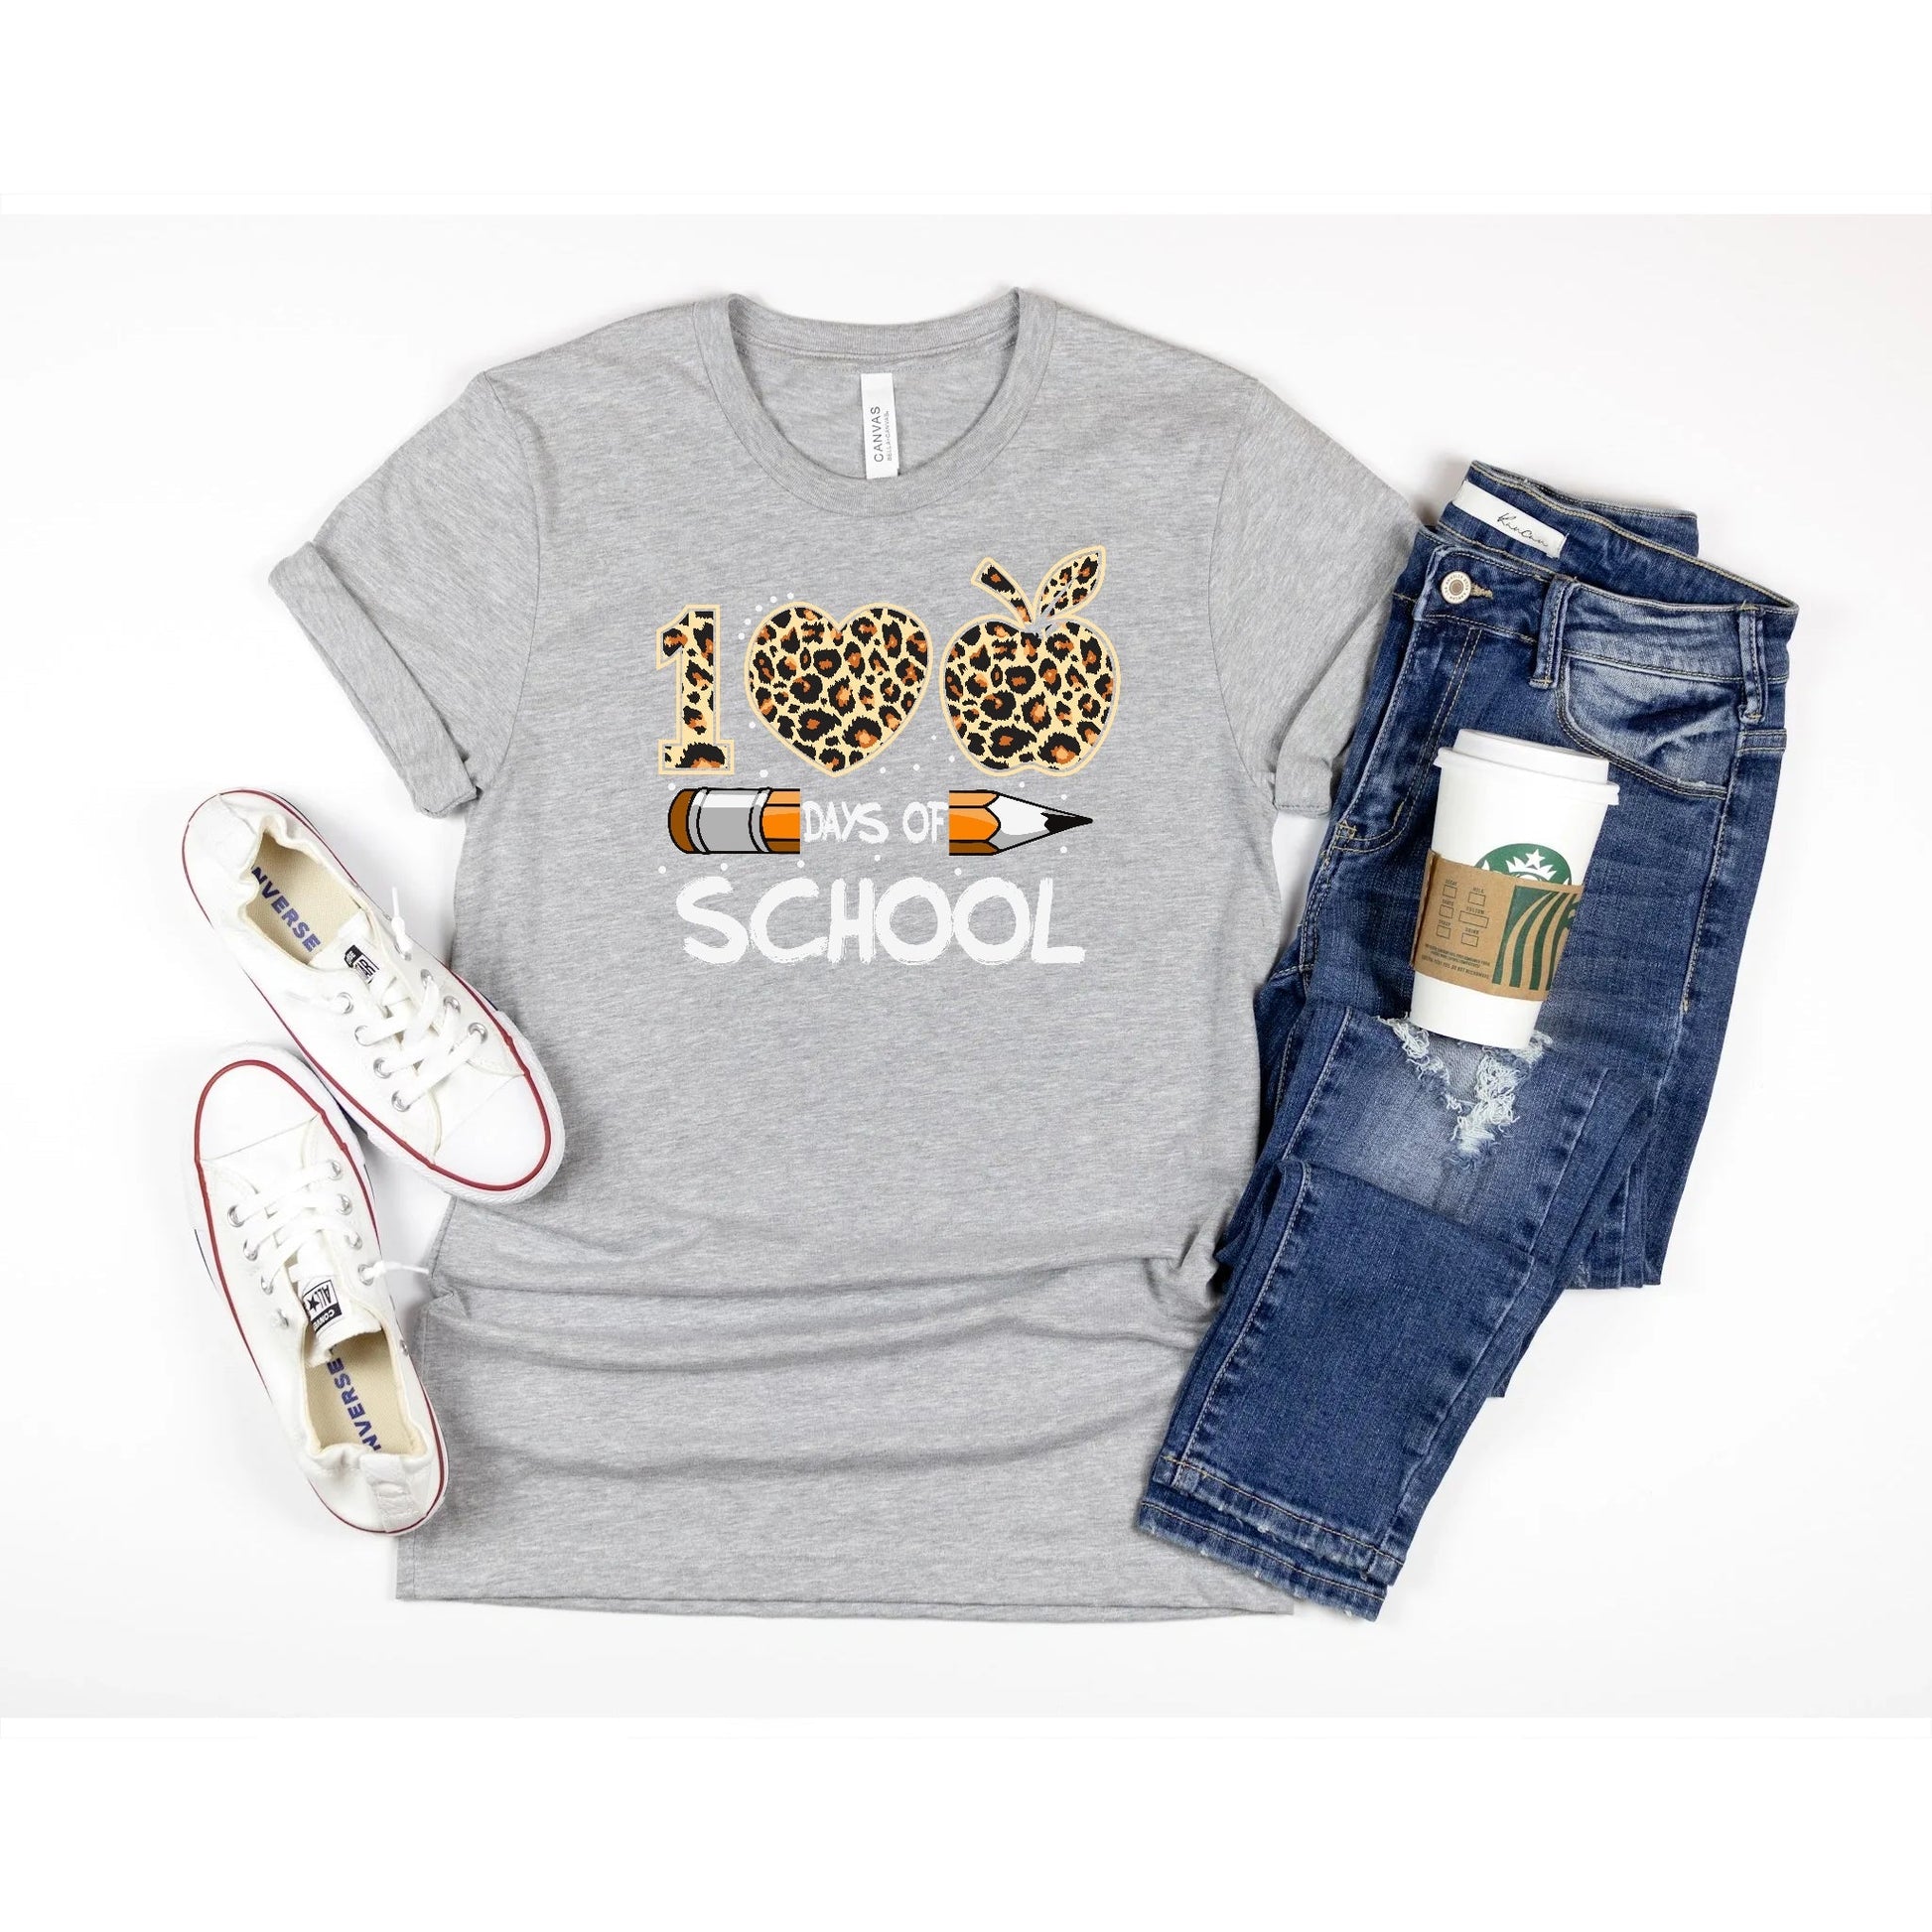 100 Days of School Leopard Print Teacher T-Shirt - Premium T-Shirt - Just $21.50! Shop now at Nine Thirty Nine Design